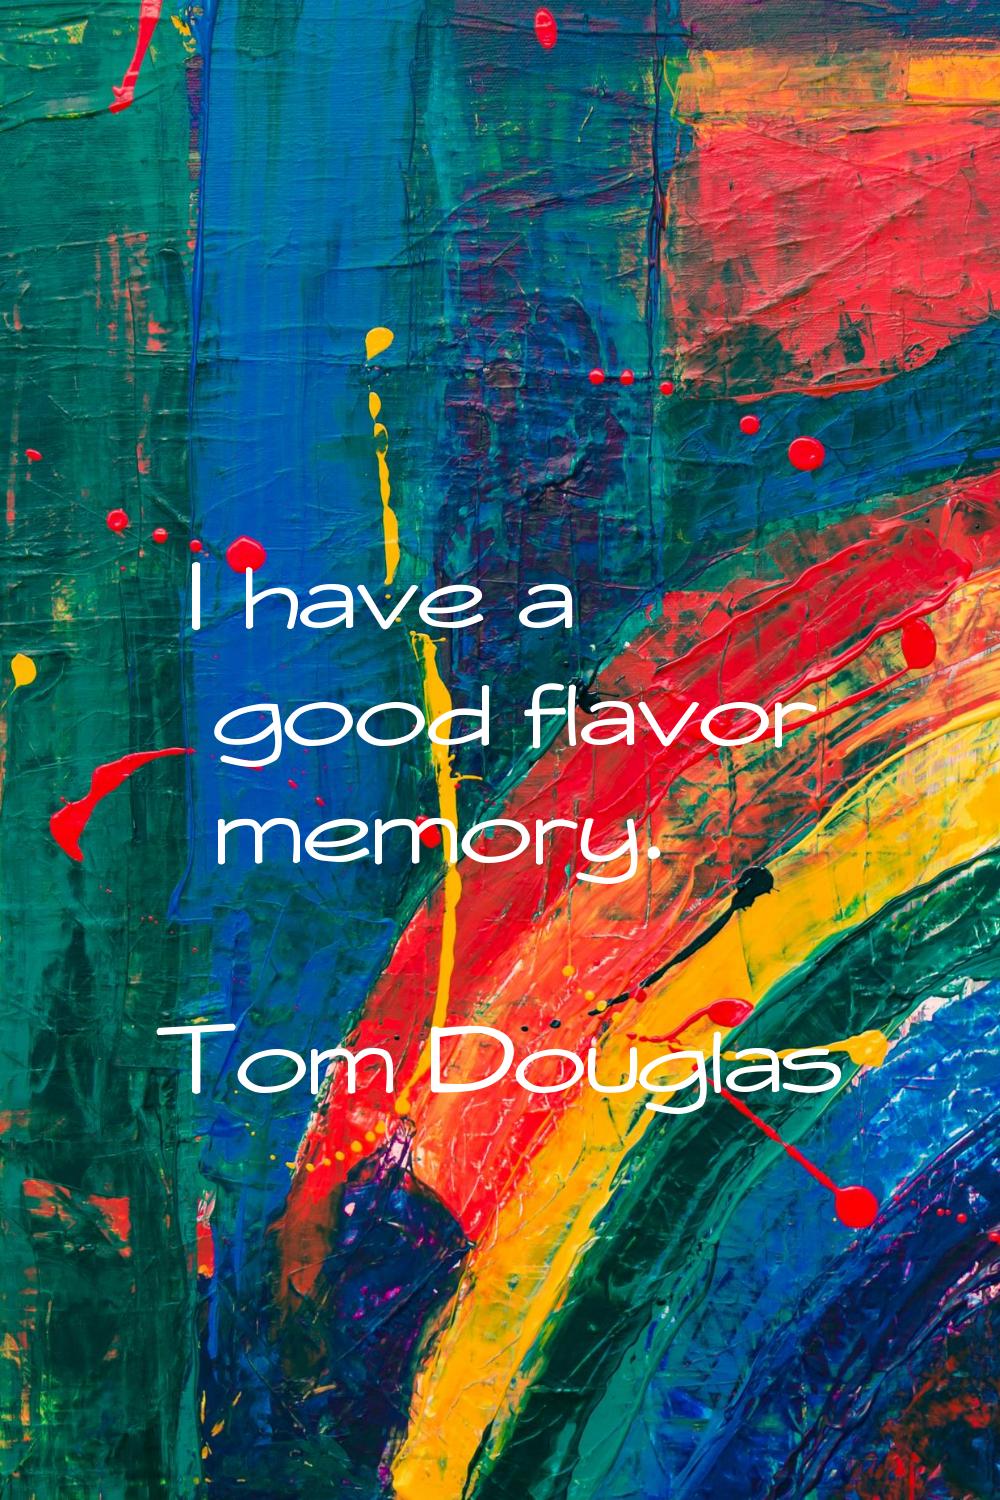 I have a good flavor memory.